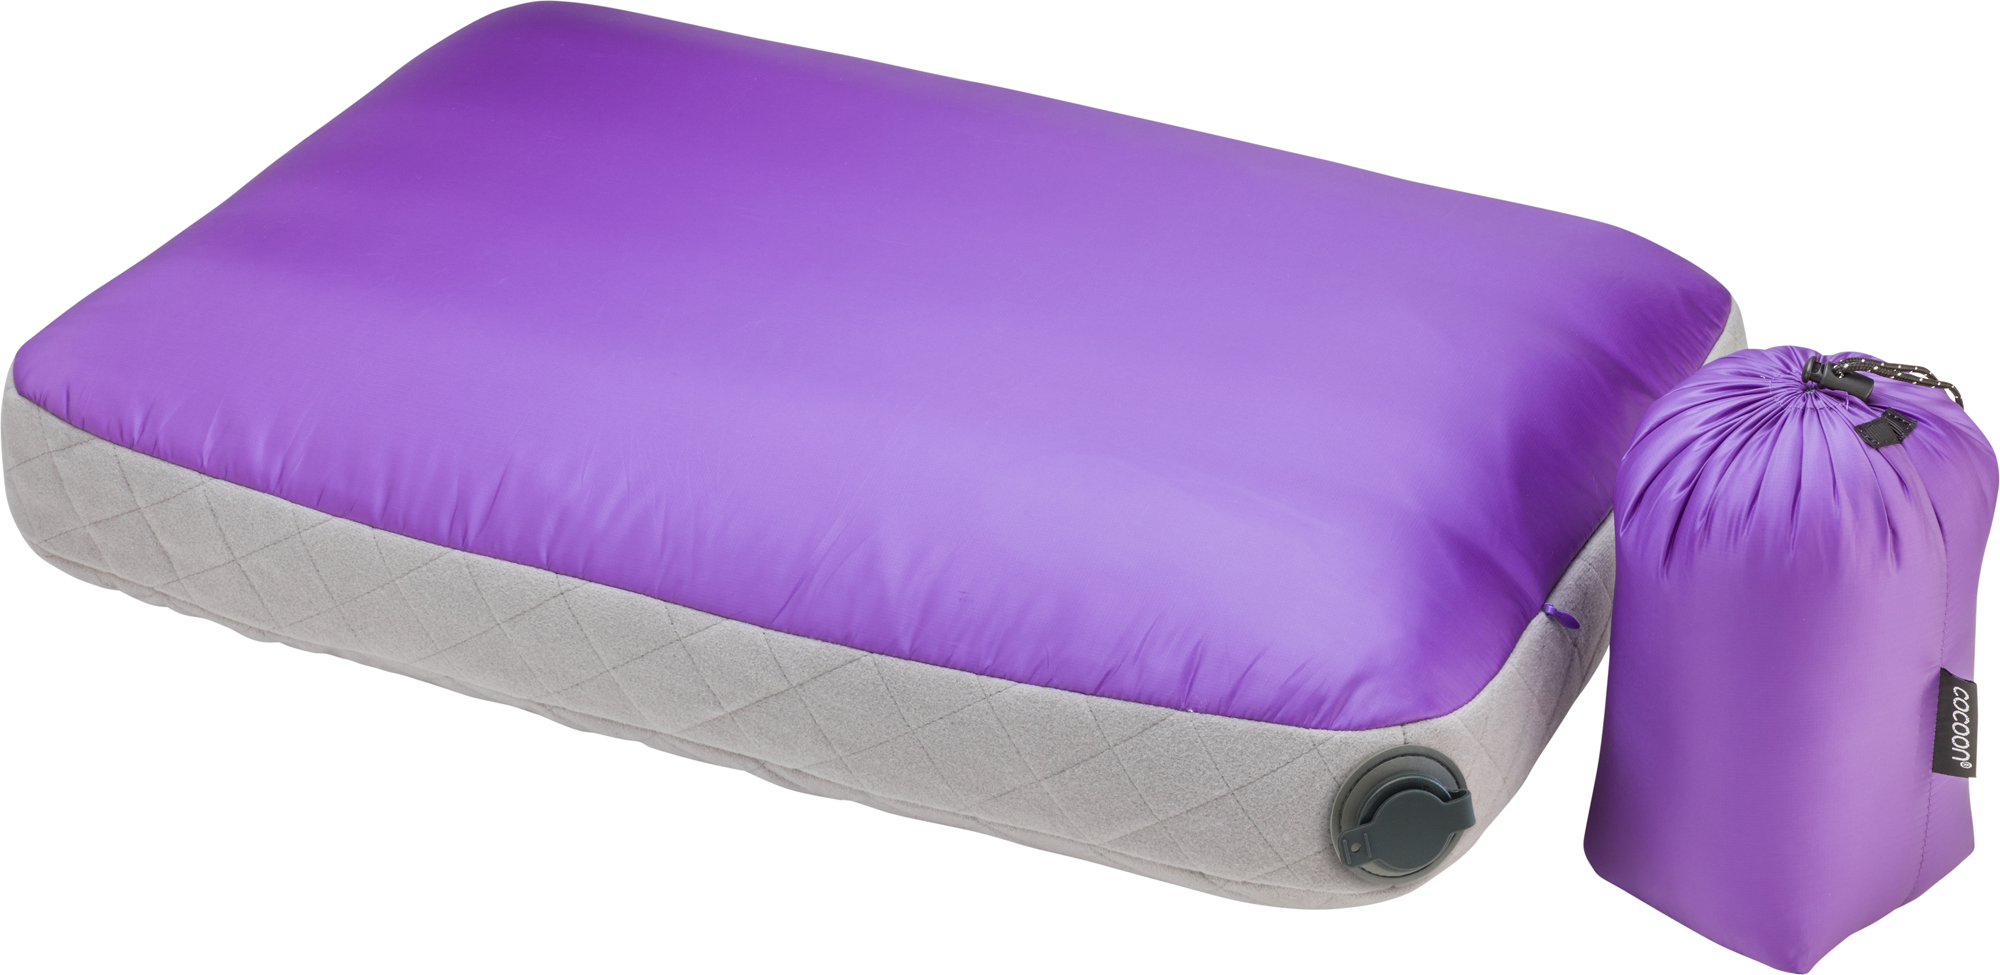 Cocoon Air Core Kissen Ultralight purple / grey  28 x 38 cm